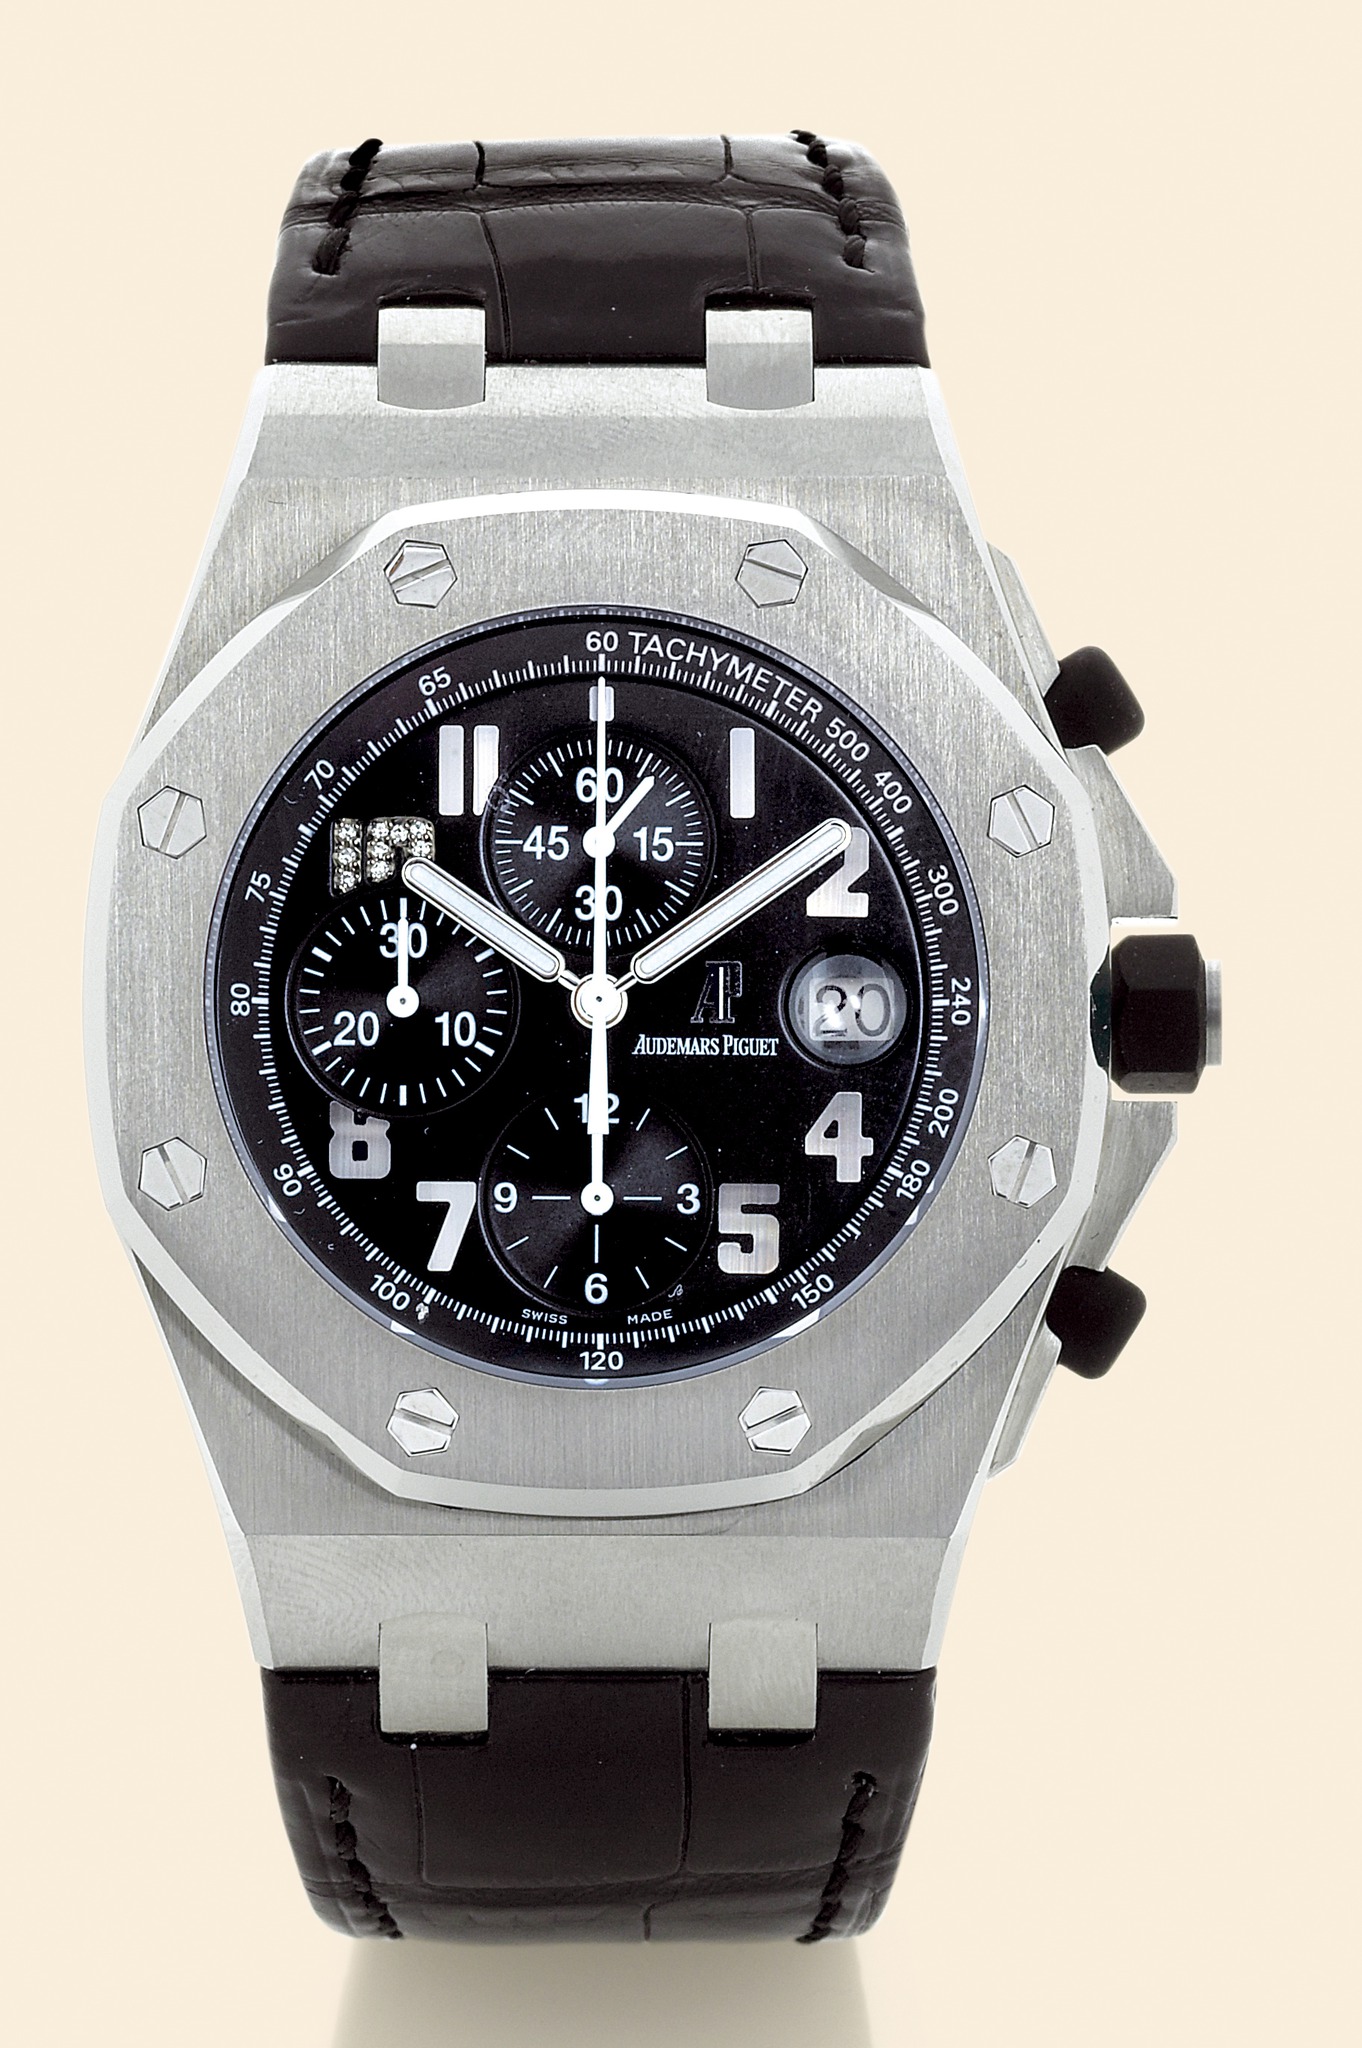 Audemars Piguet Royal Oak Offshore Jay-Z Steel watch REF: 26055ST.OO.D002CR.01